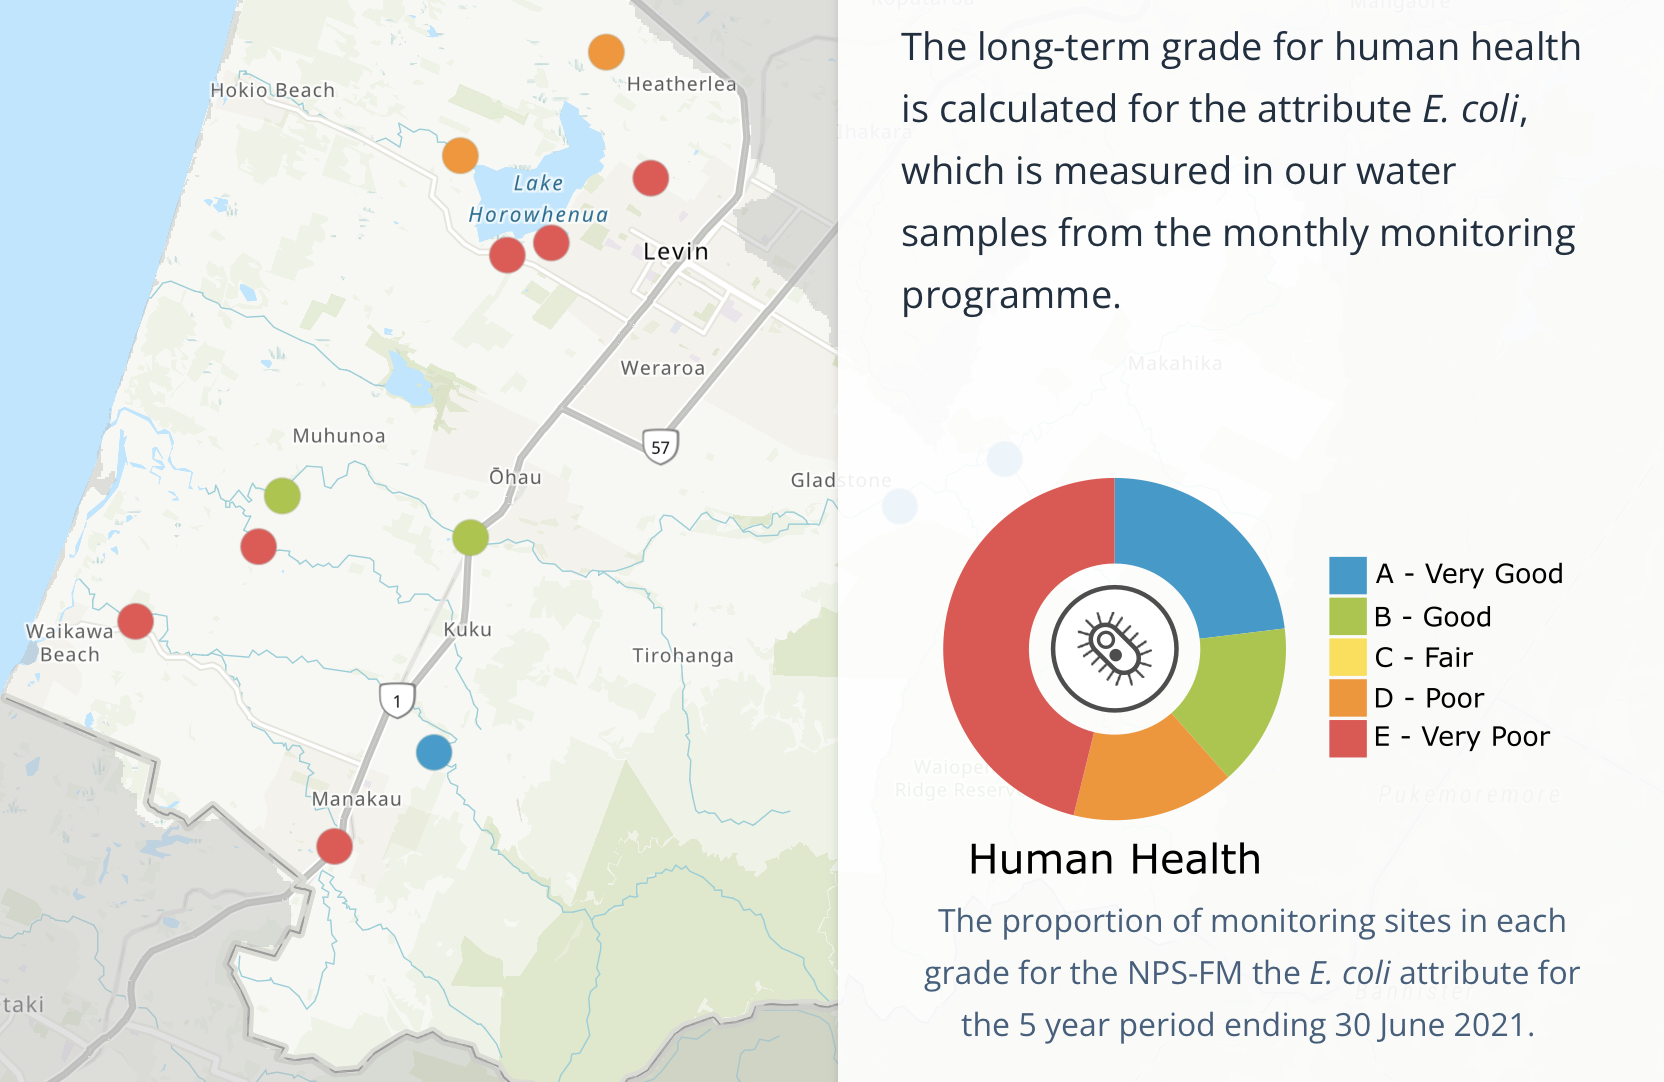 Longterm grade for human health ranks Very Poor. 